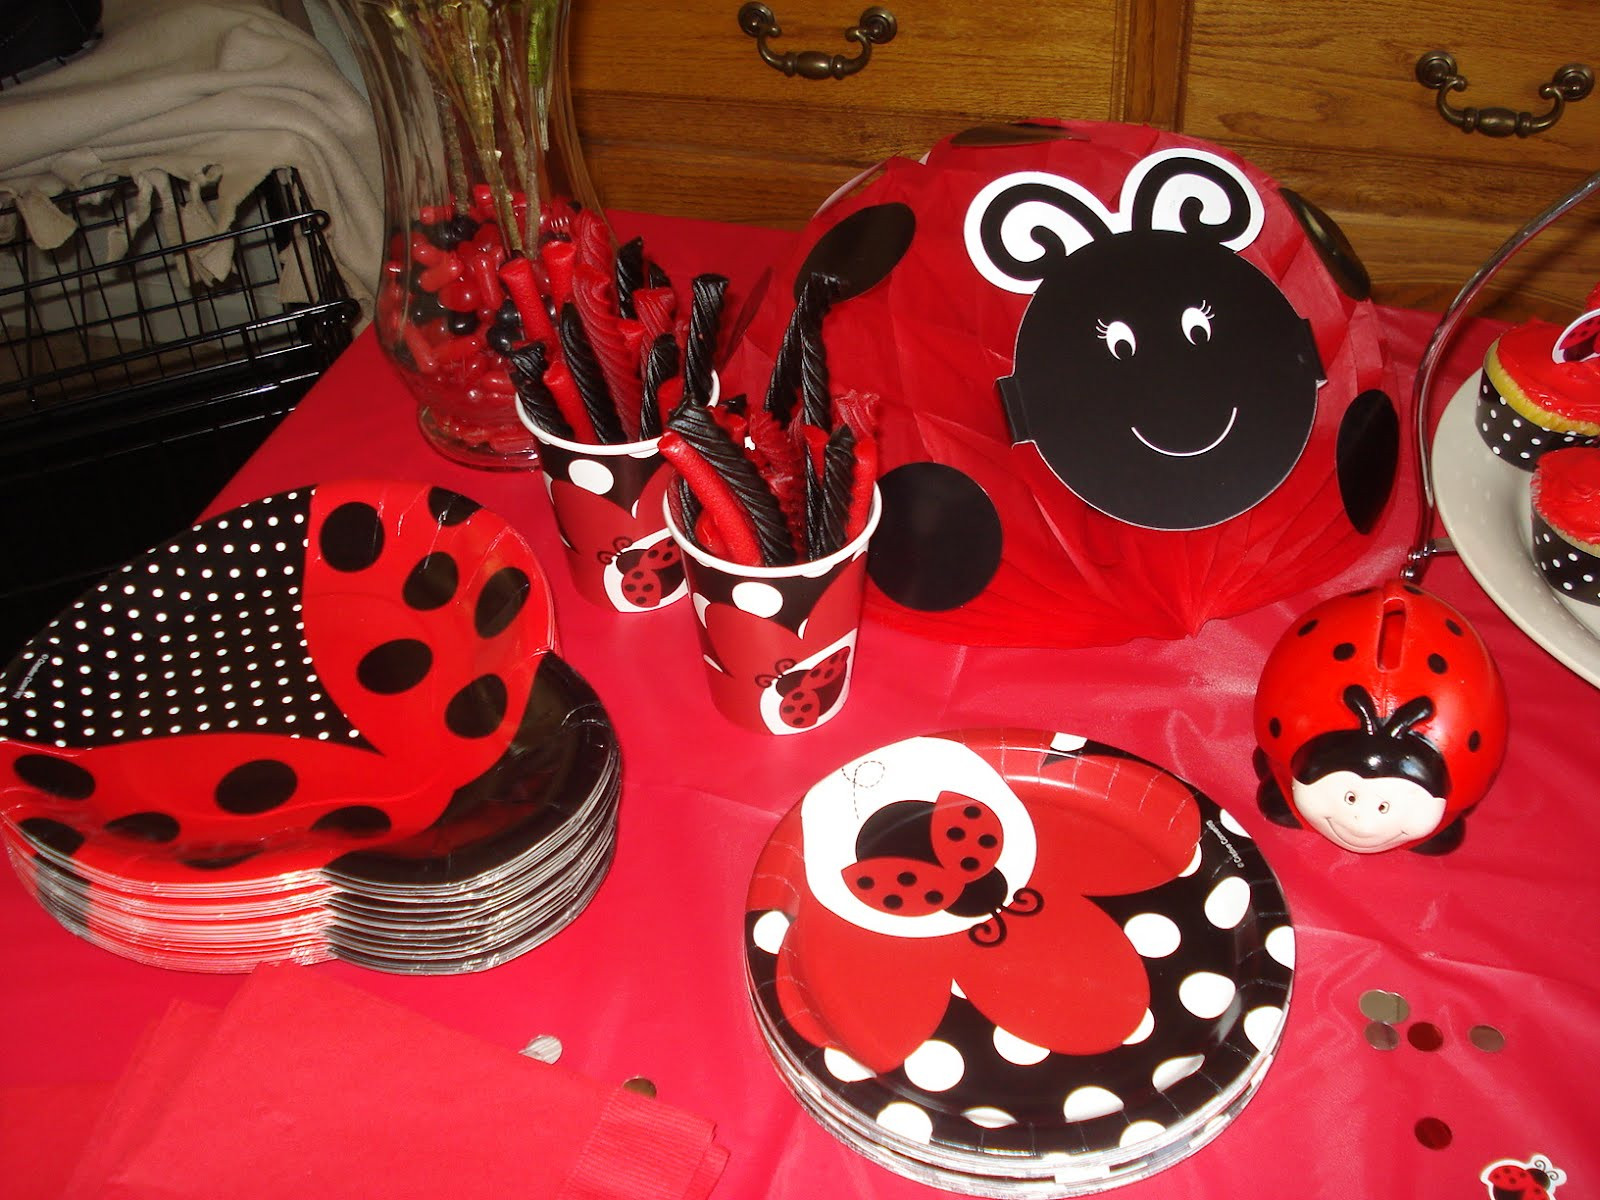 Ladybug Birthday Party Decorations
 gold country girls A Ladybug Birthday Party